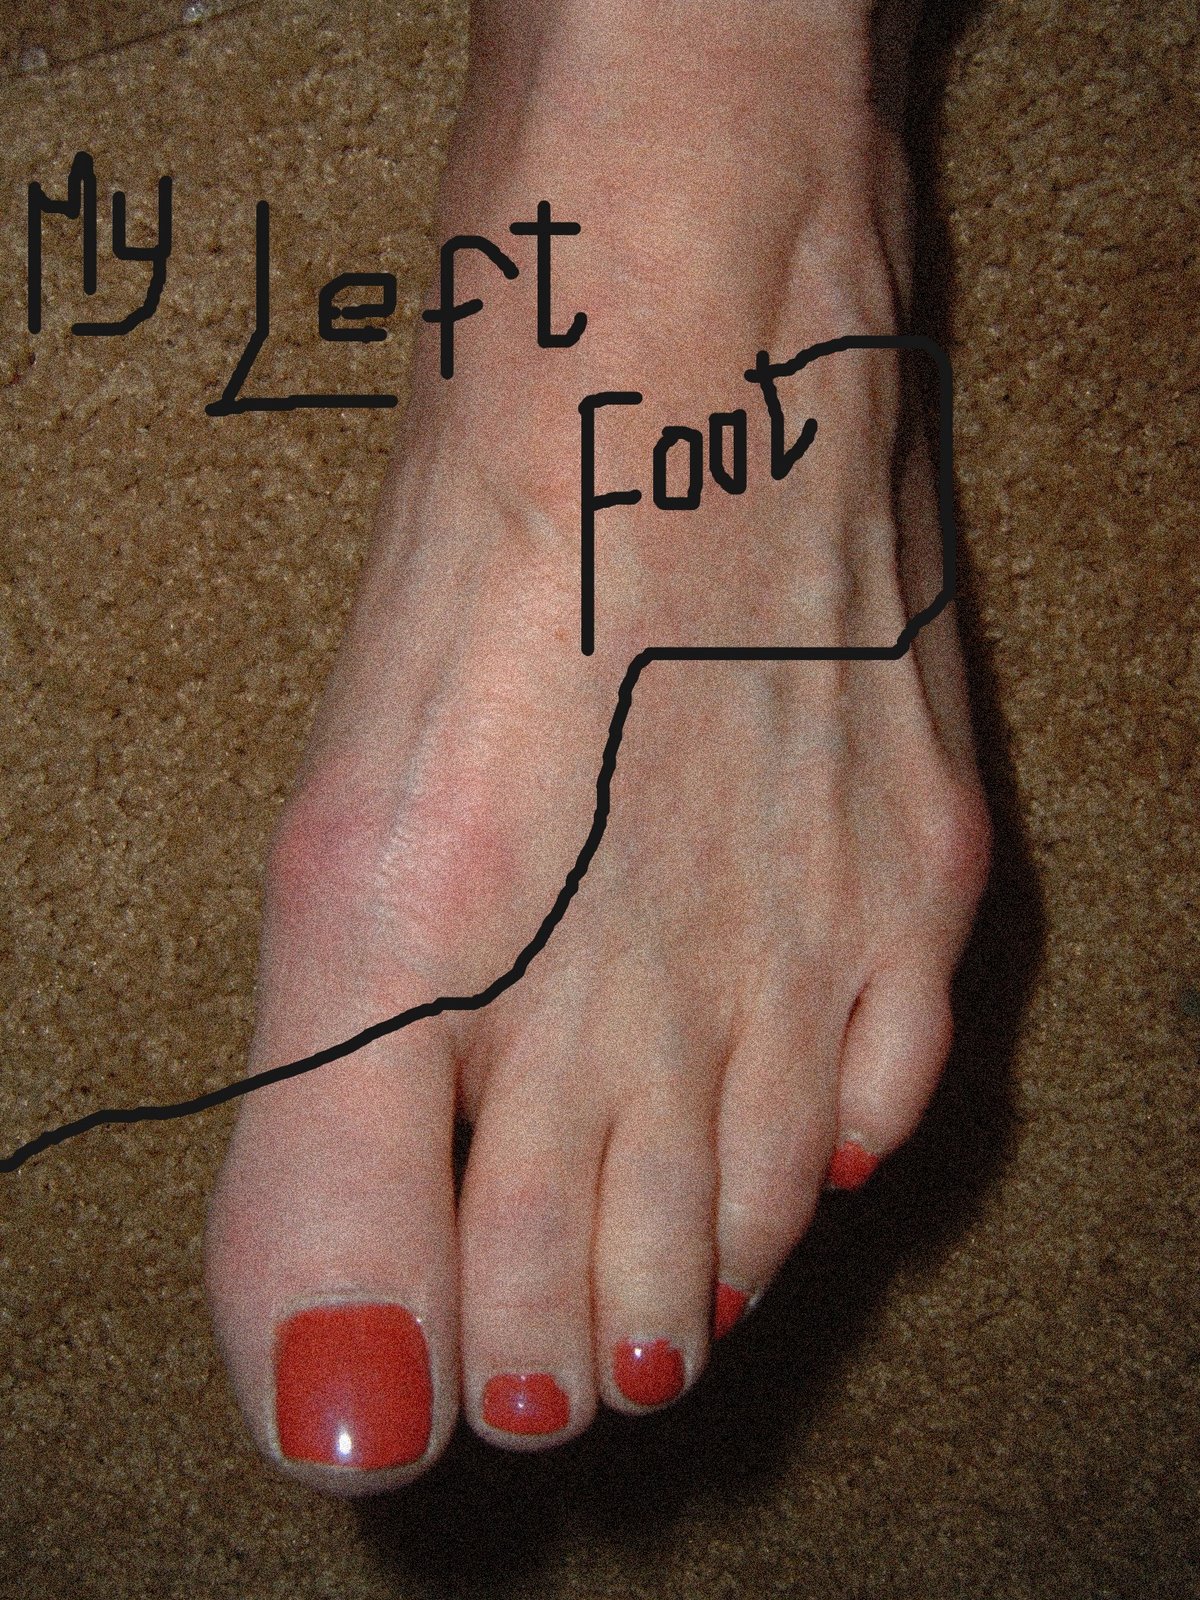 [My+Left+Foot.jpg]